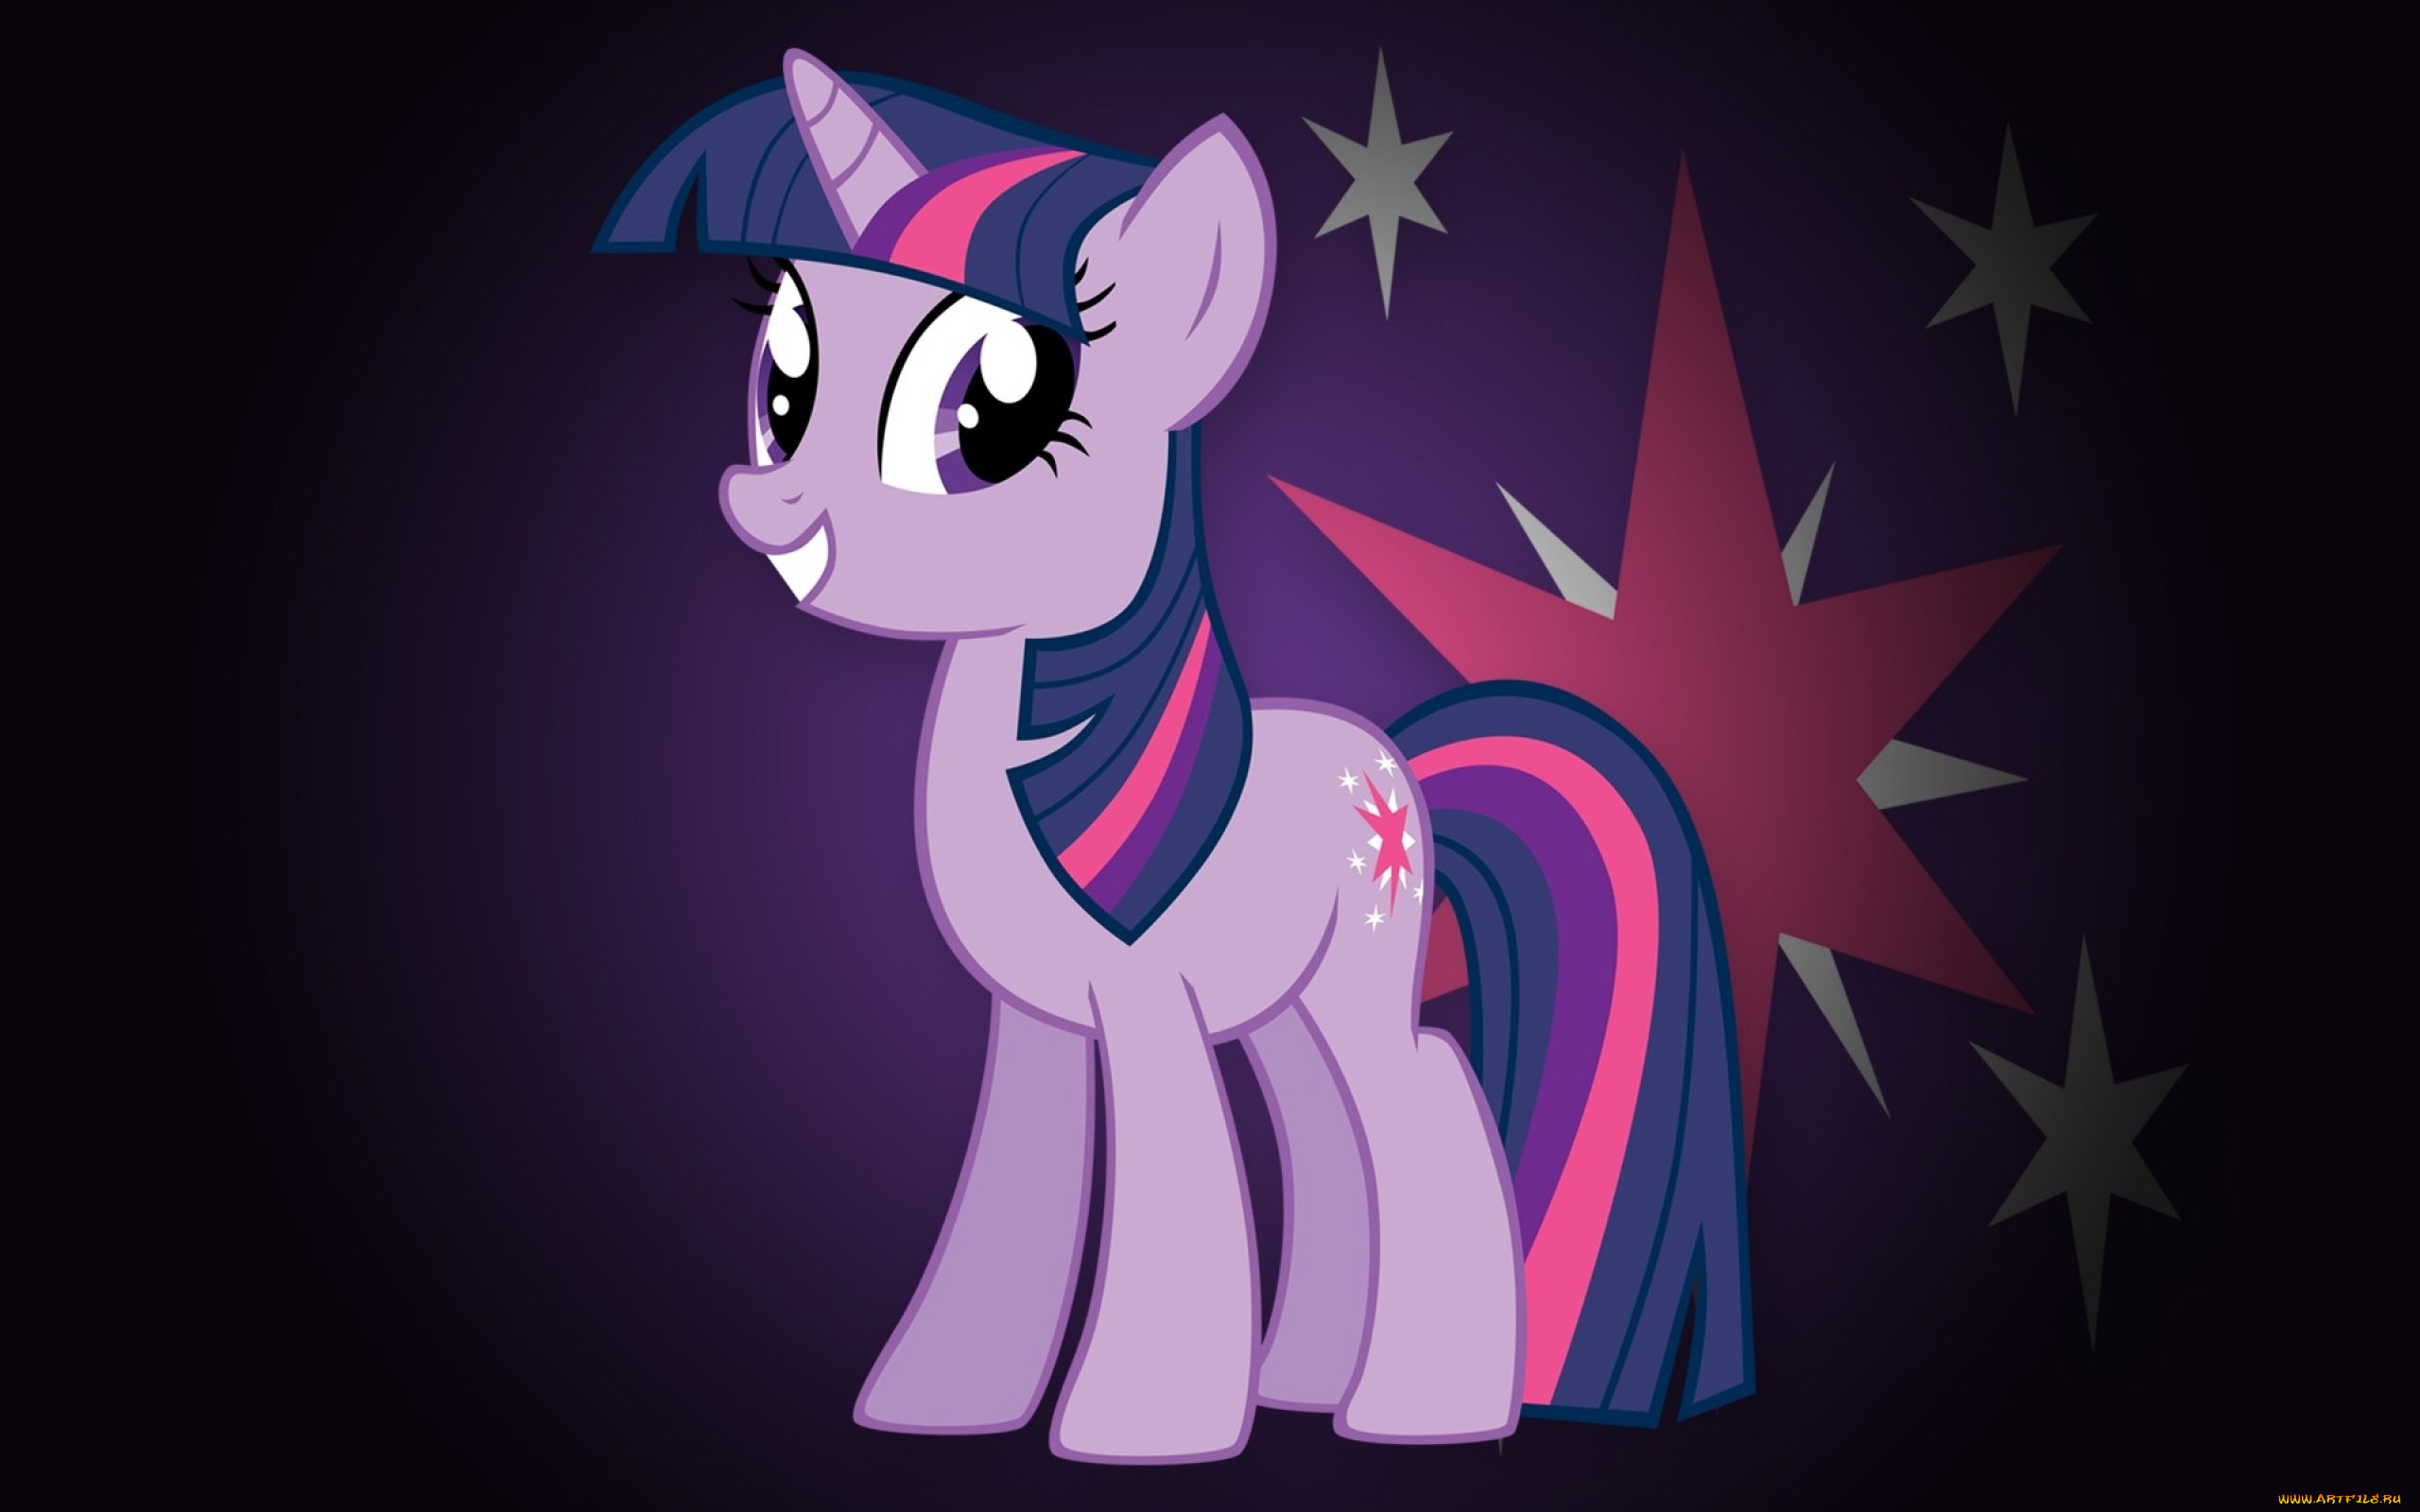 My little pony twilight. Сумеречная Искорка/Твайлайт Спаркл. My little Pony Твайлайт Спаркл. Сумеречная Искорка / Twilight Sparkle (my little Pony). МЛП Вики Искорка.